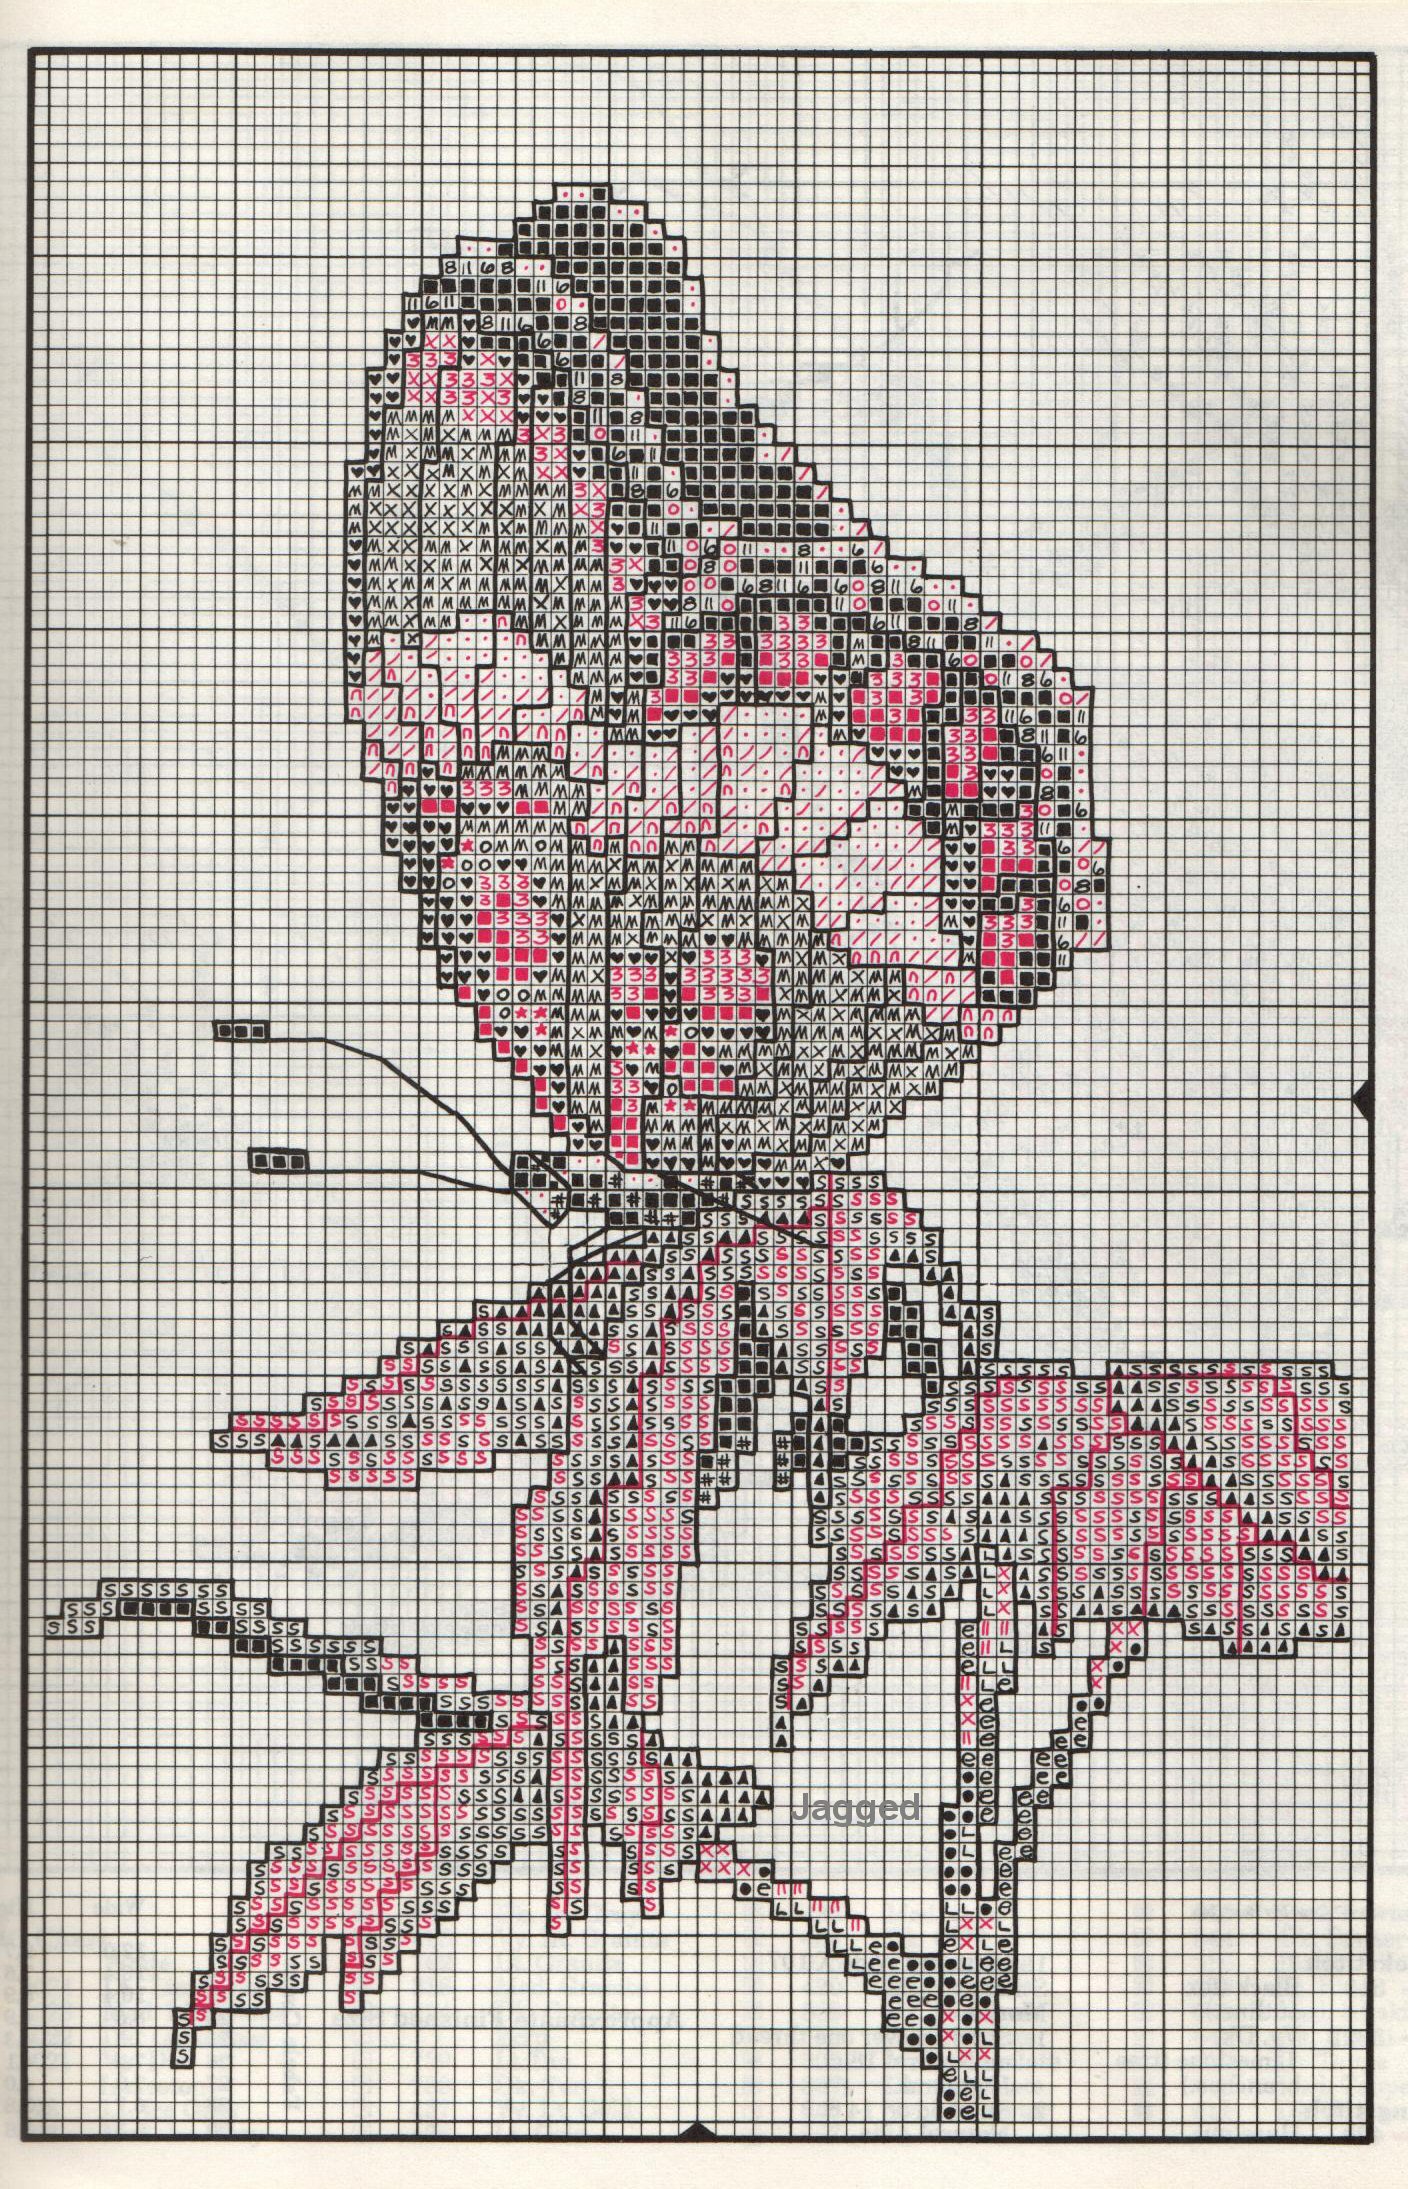 Nice butterfly resting on flowers cross stitch pattern